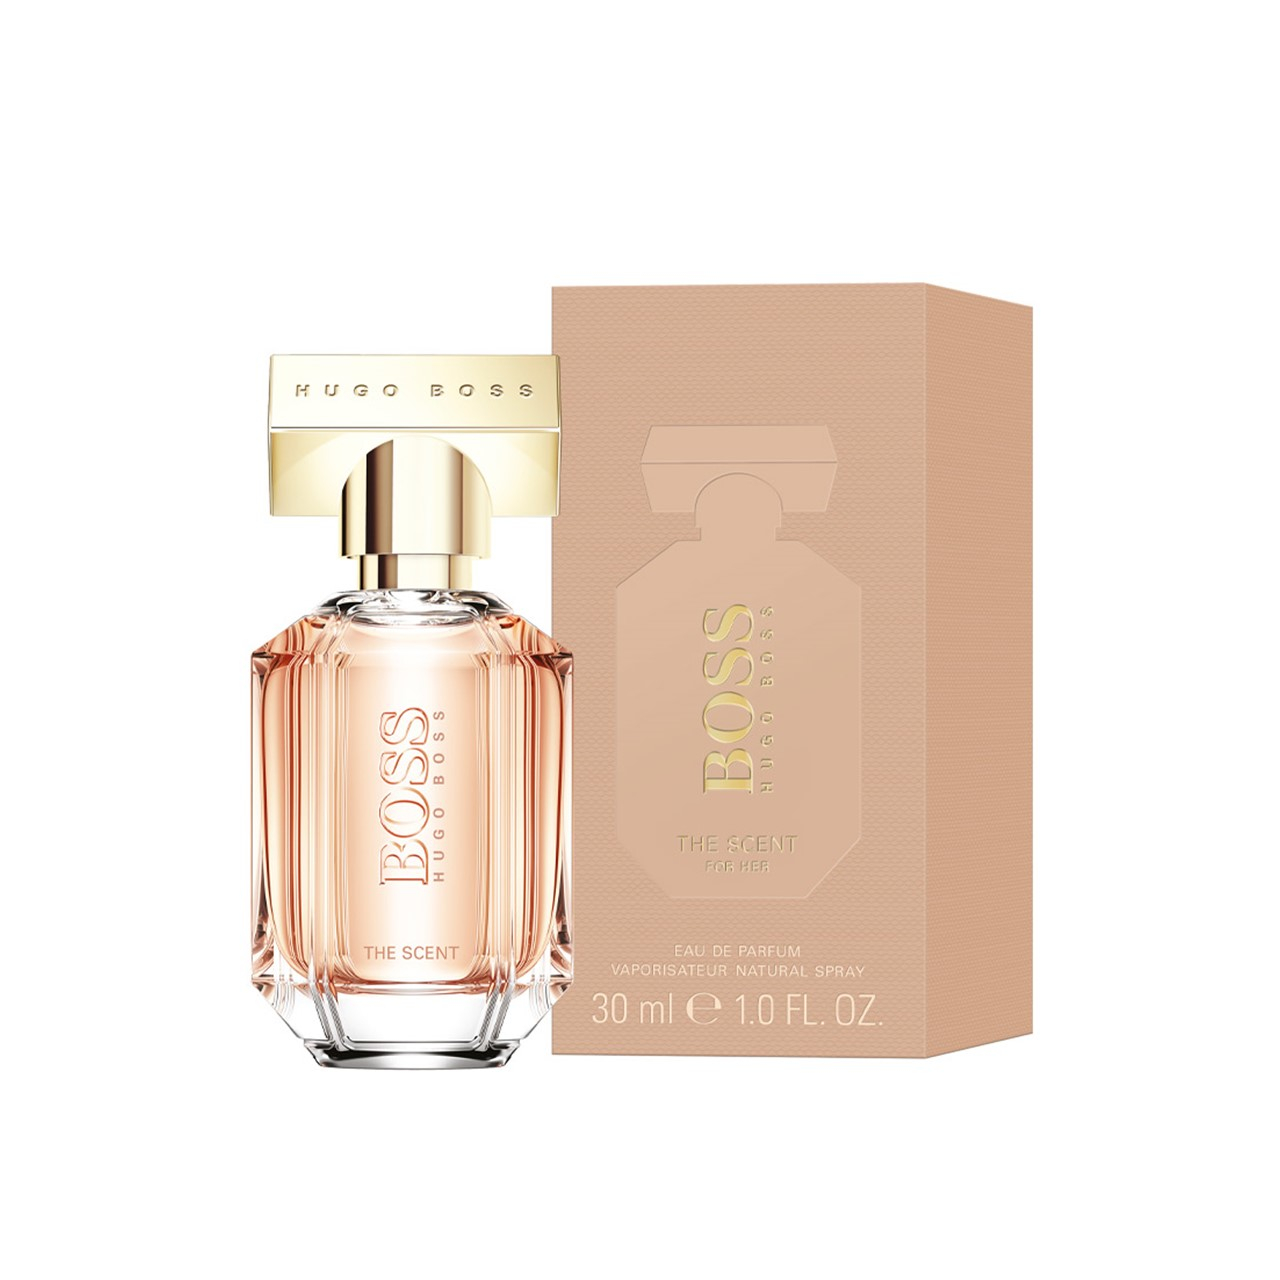 Hugo Boss Boss The Scent For Her Eau de Parfum 30ml (1.0fl oz)